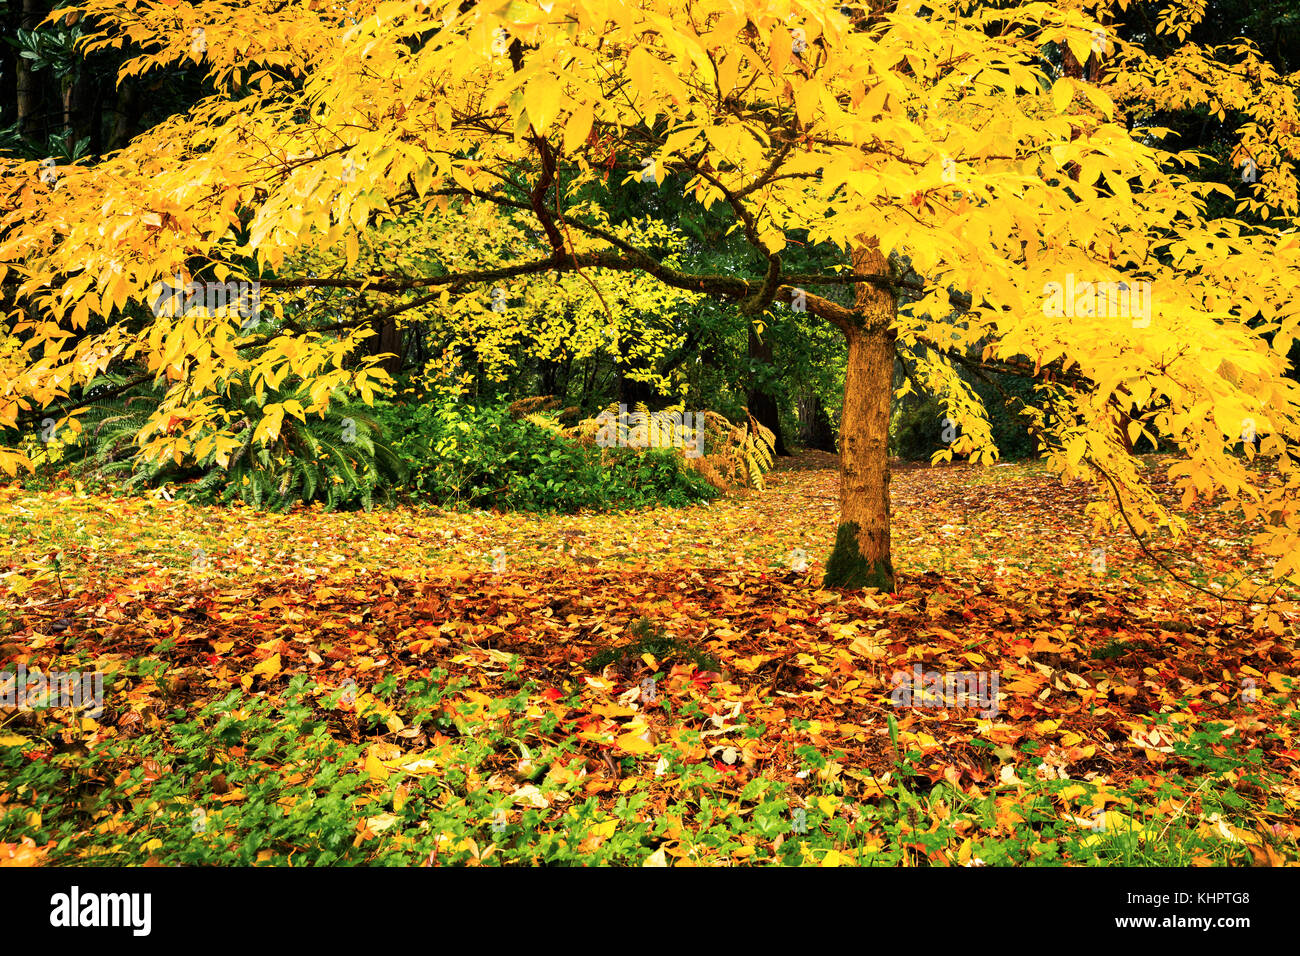 Tree with yellow fall foliage in Seattle's Washington Park Arboretum botanical Garden Stock Photo